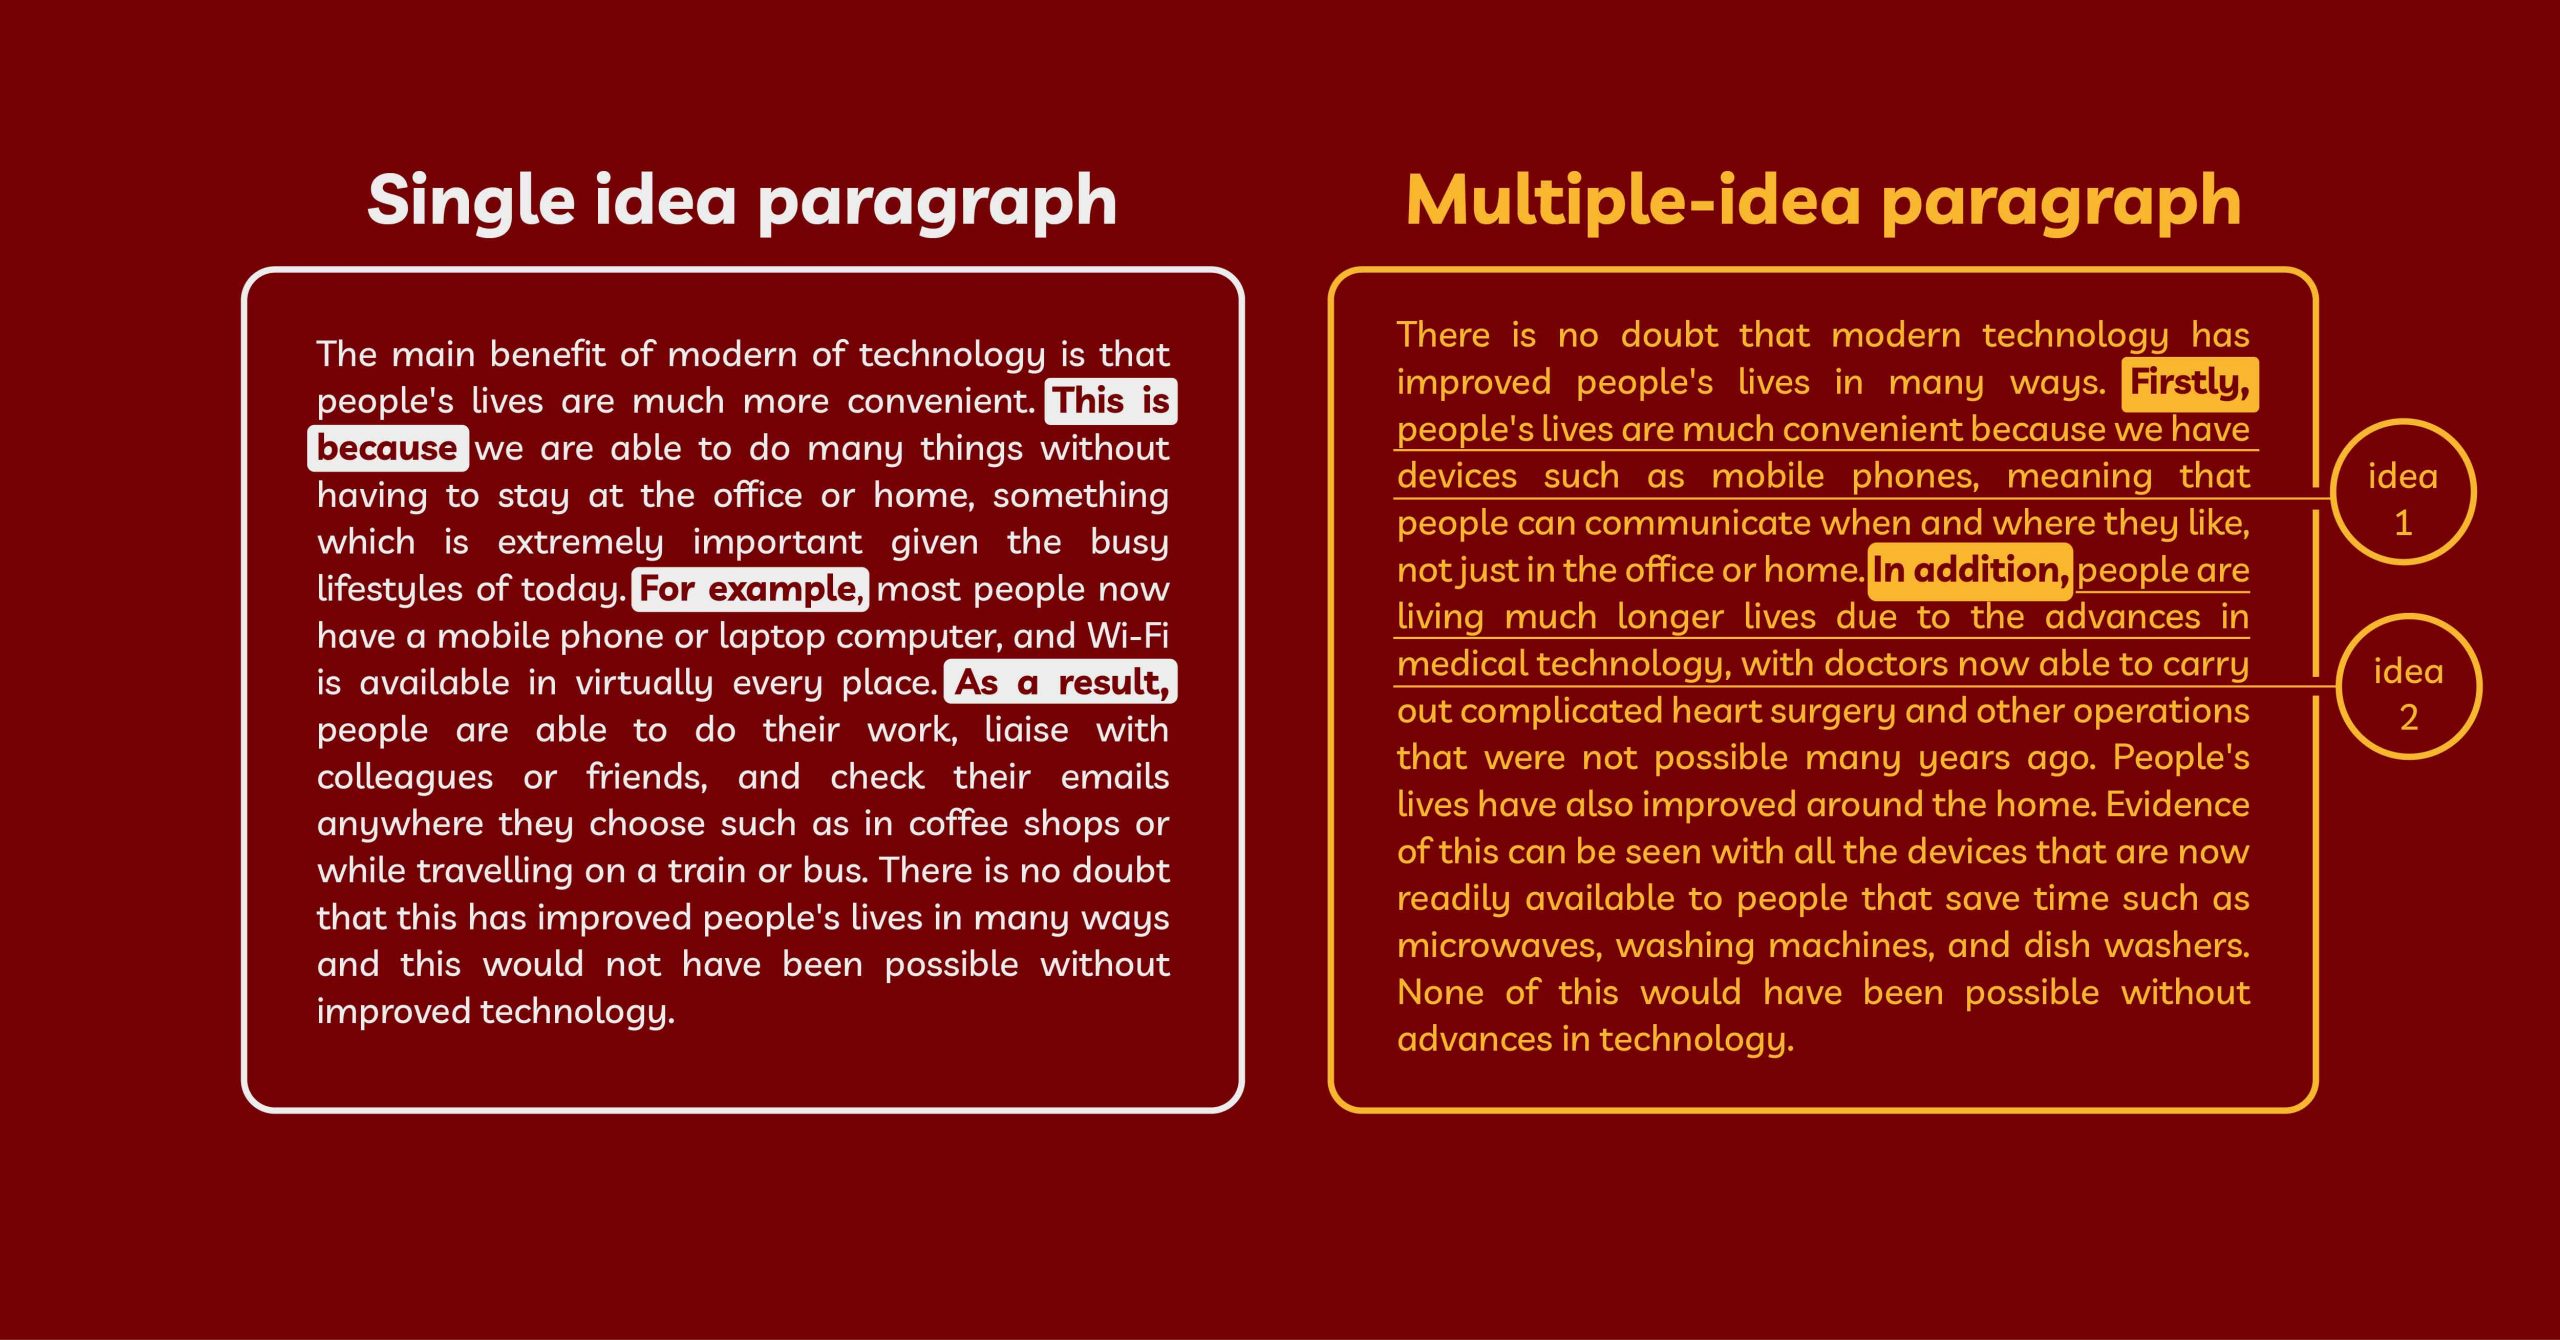 phan-biet-single-idea-va-multiple-idea-paragraph-trong-ielts-writing-task-2-p2